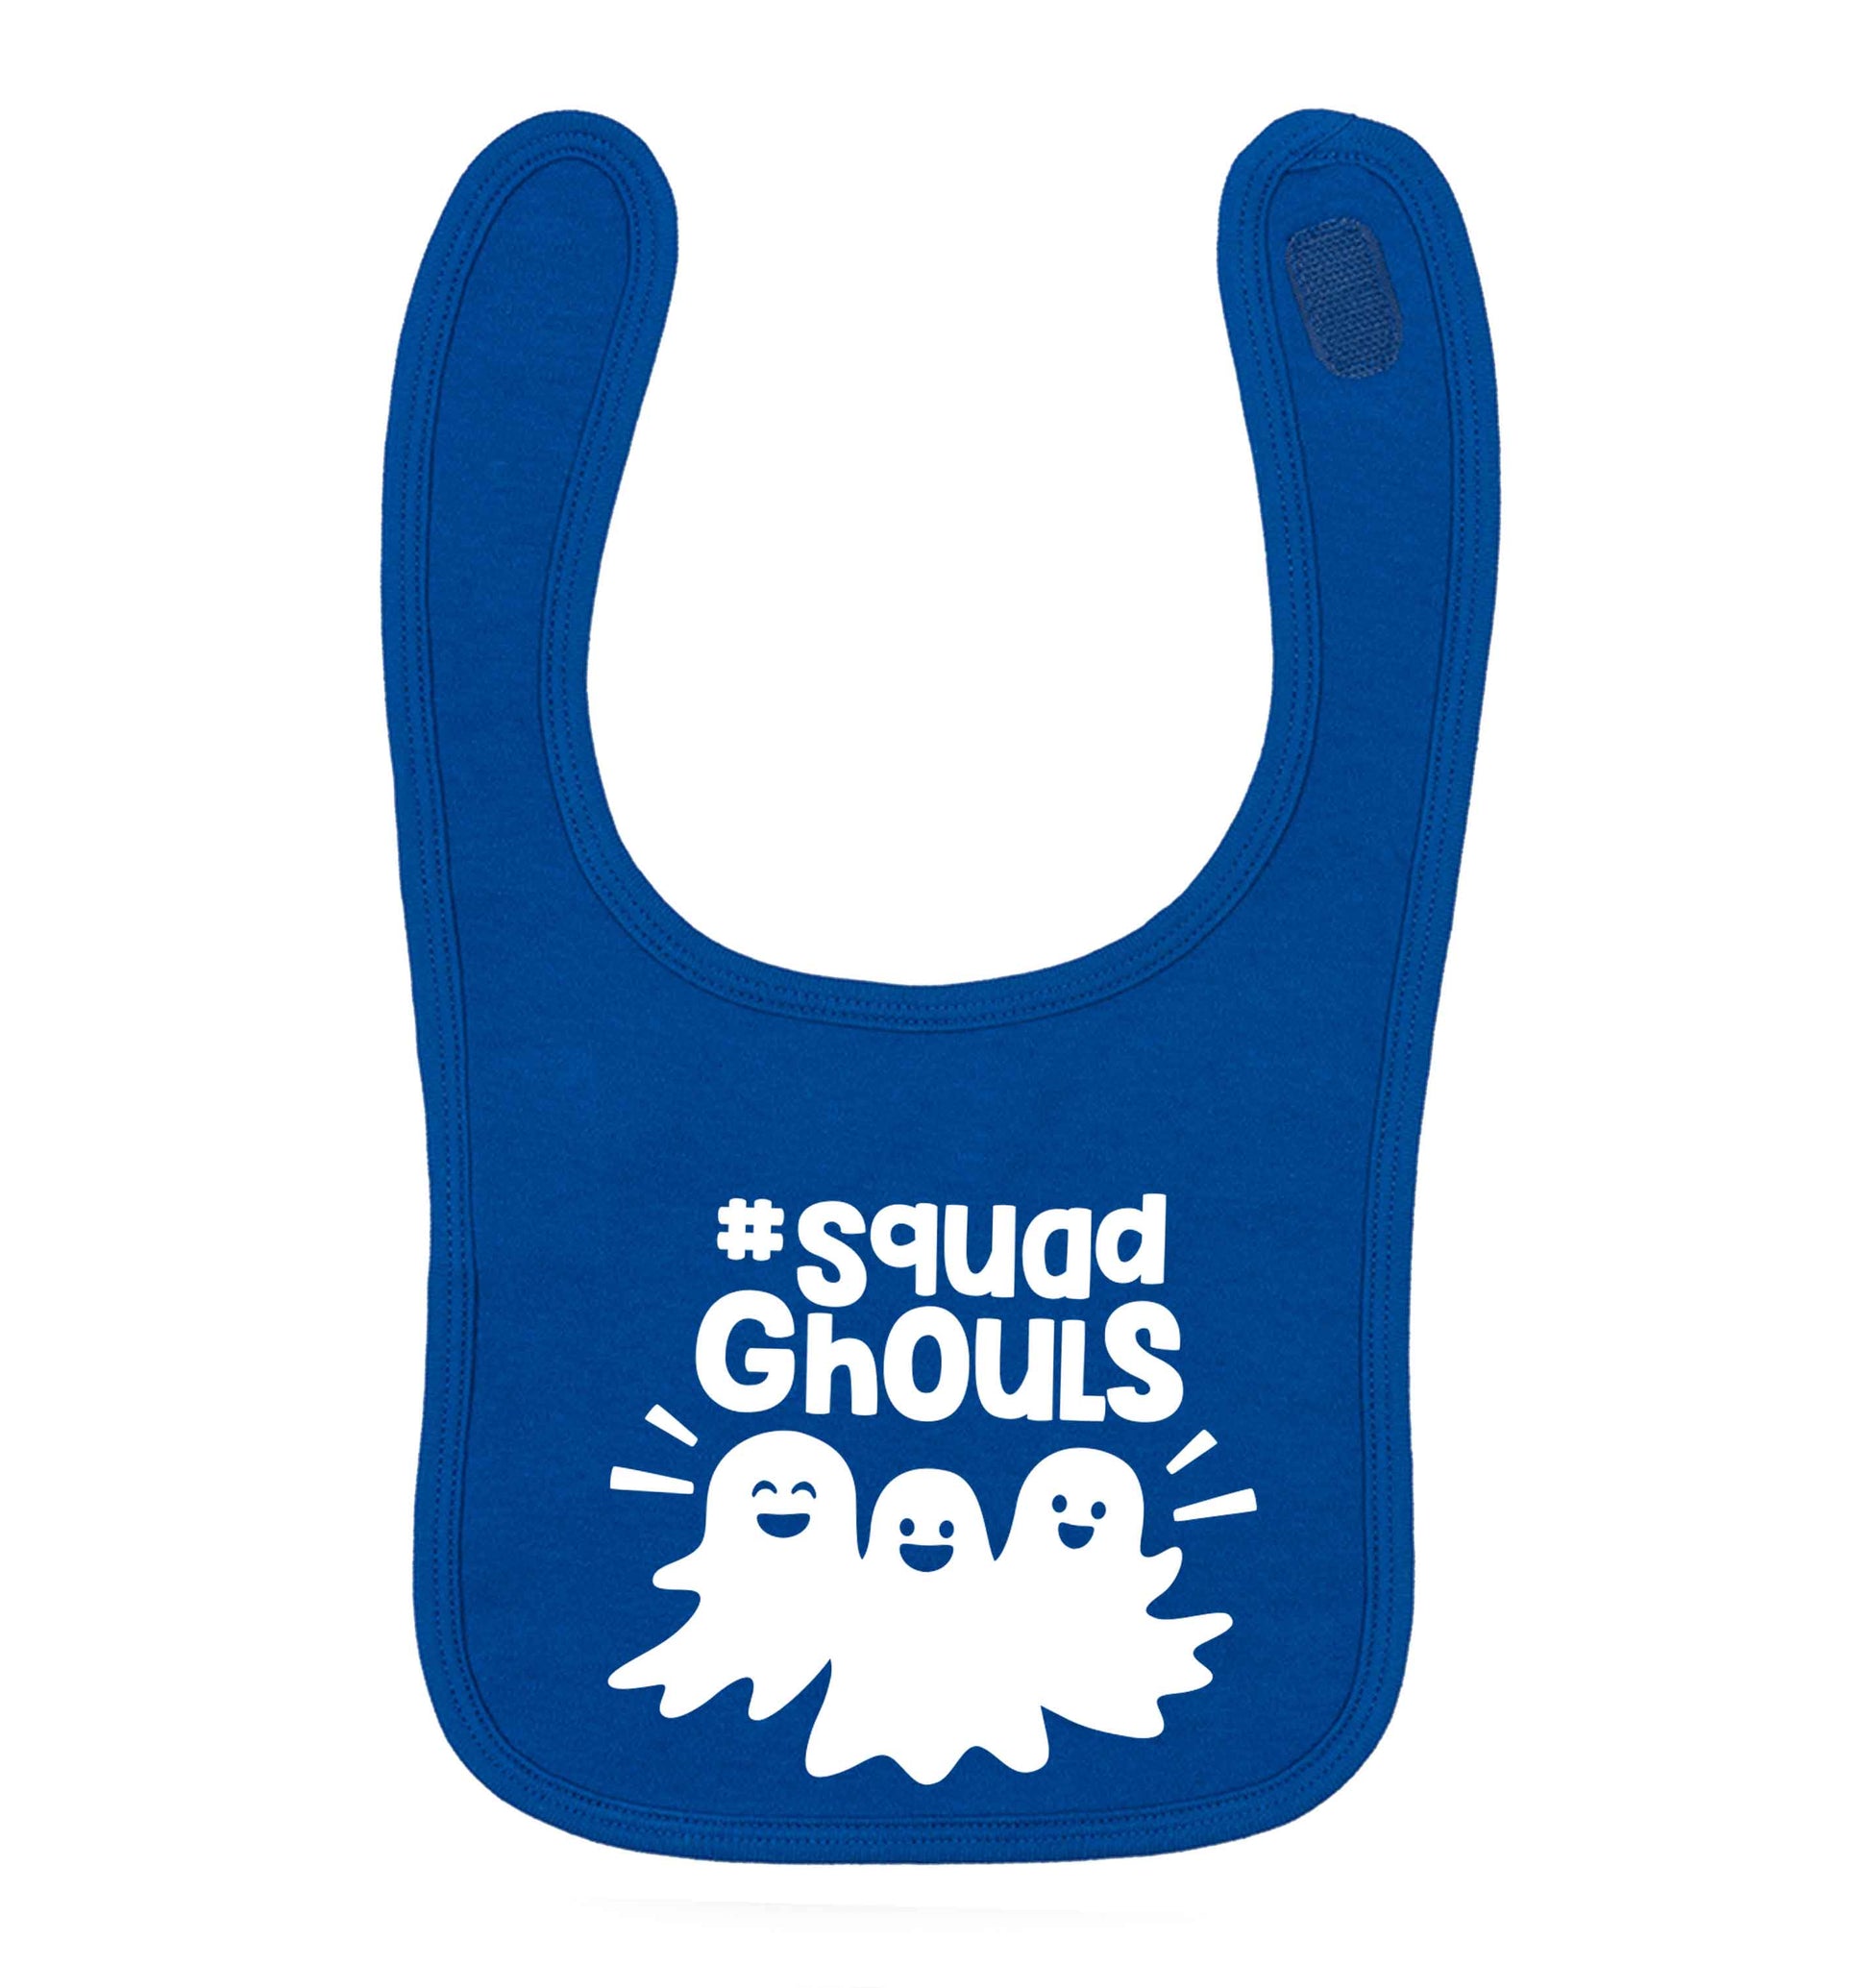 Squad ghouls Kit royal blue baby bib